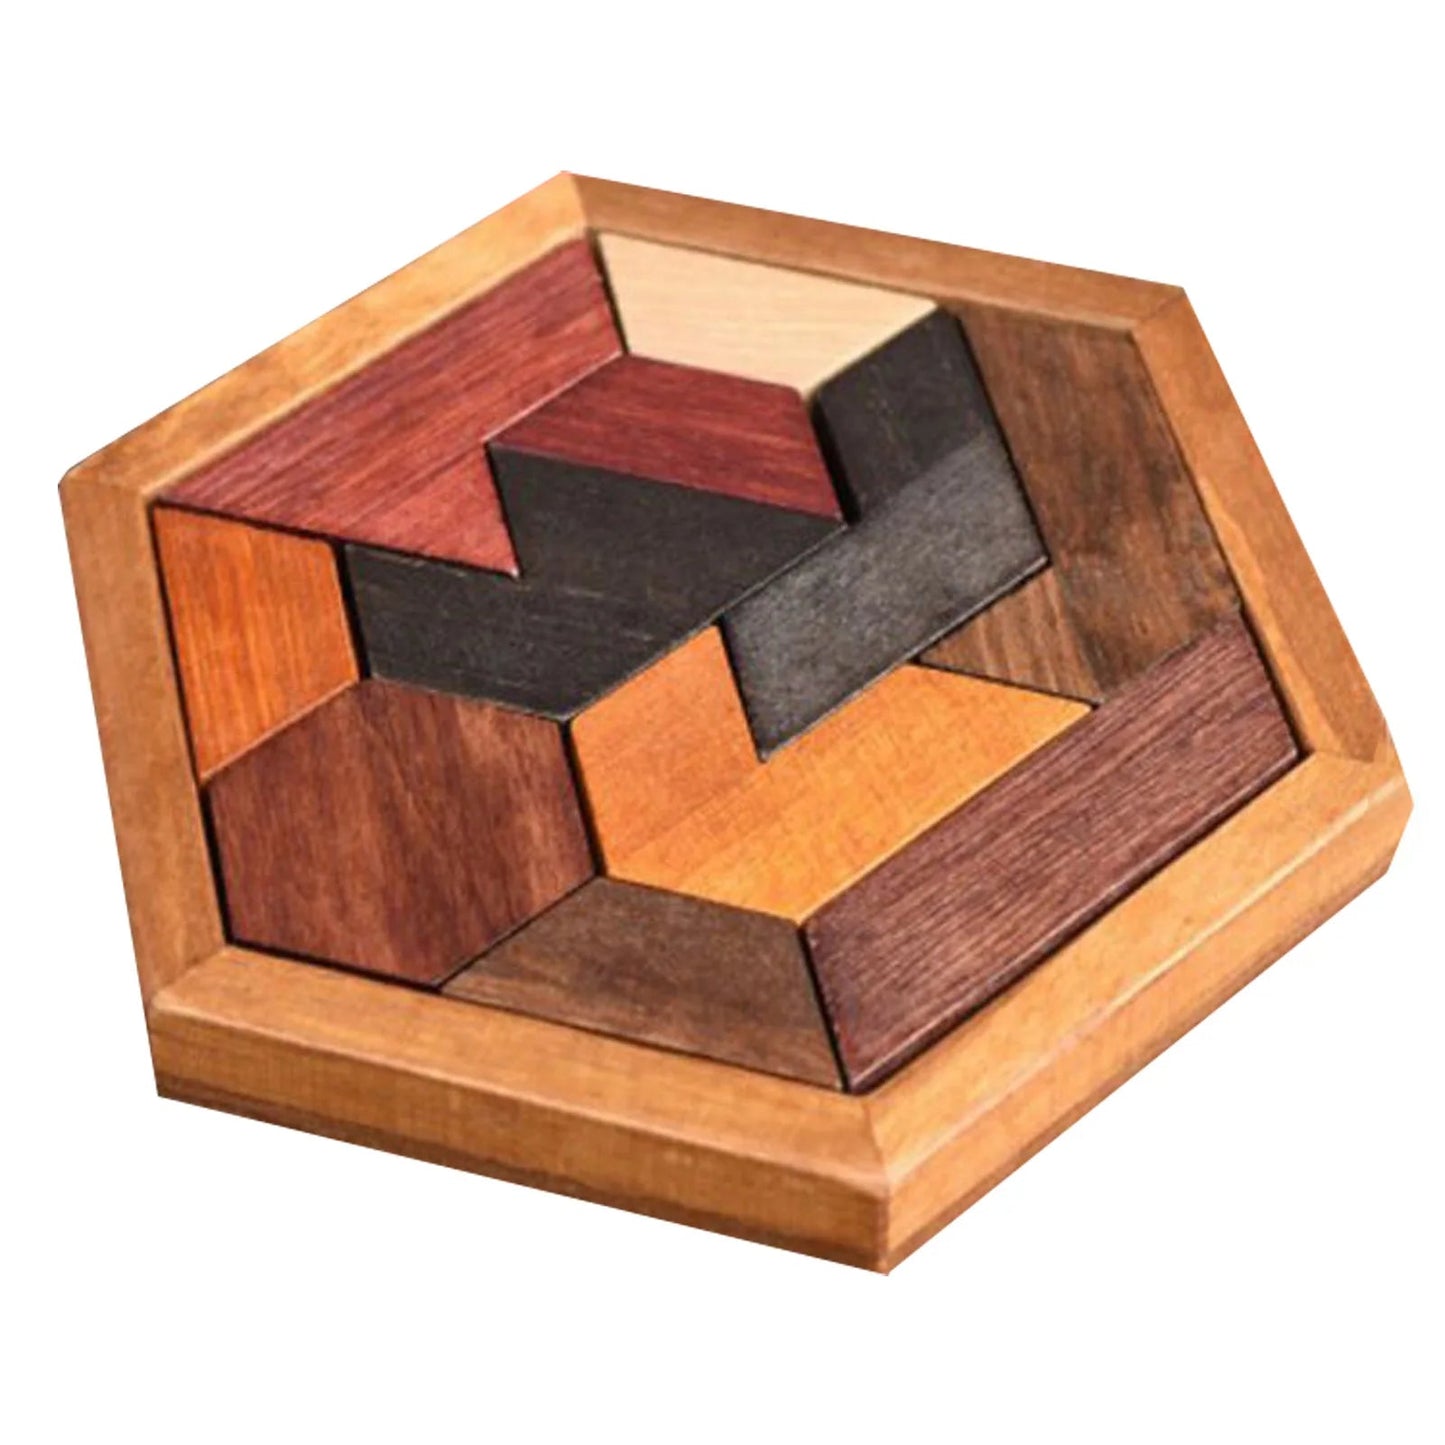 Hexagonal Wooden Geometric Shape Jigsaw Puzzles Ziggy's Pop Toy Shoppe